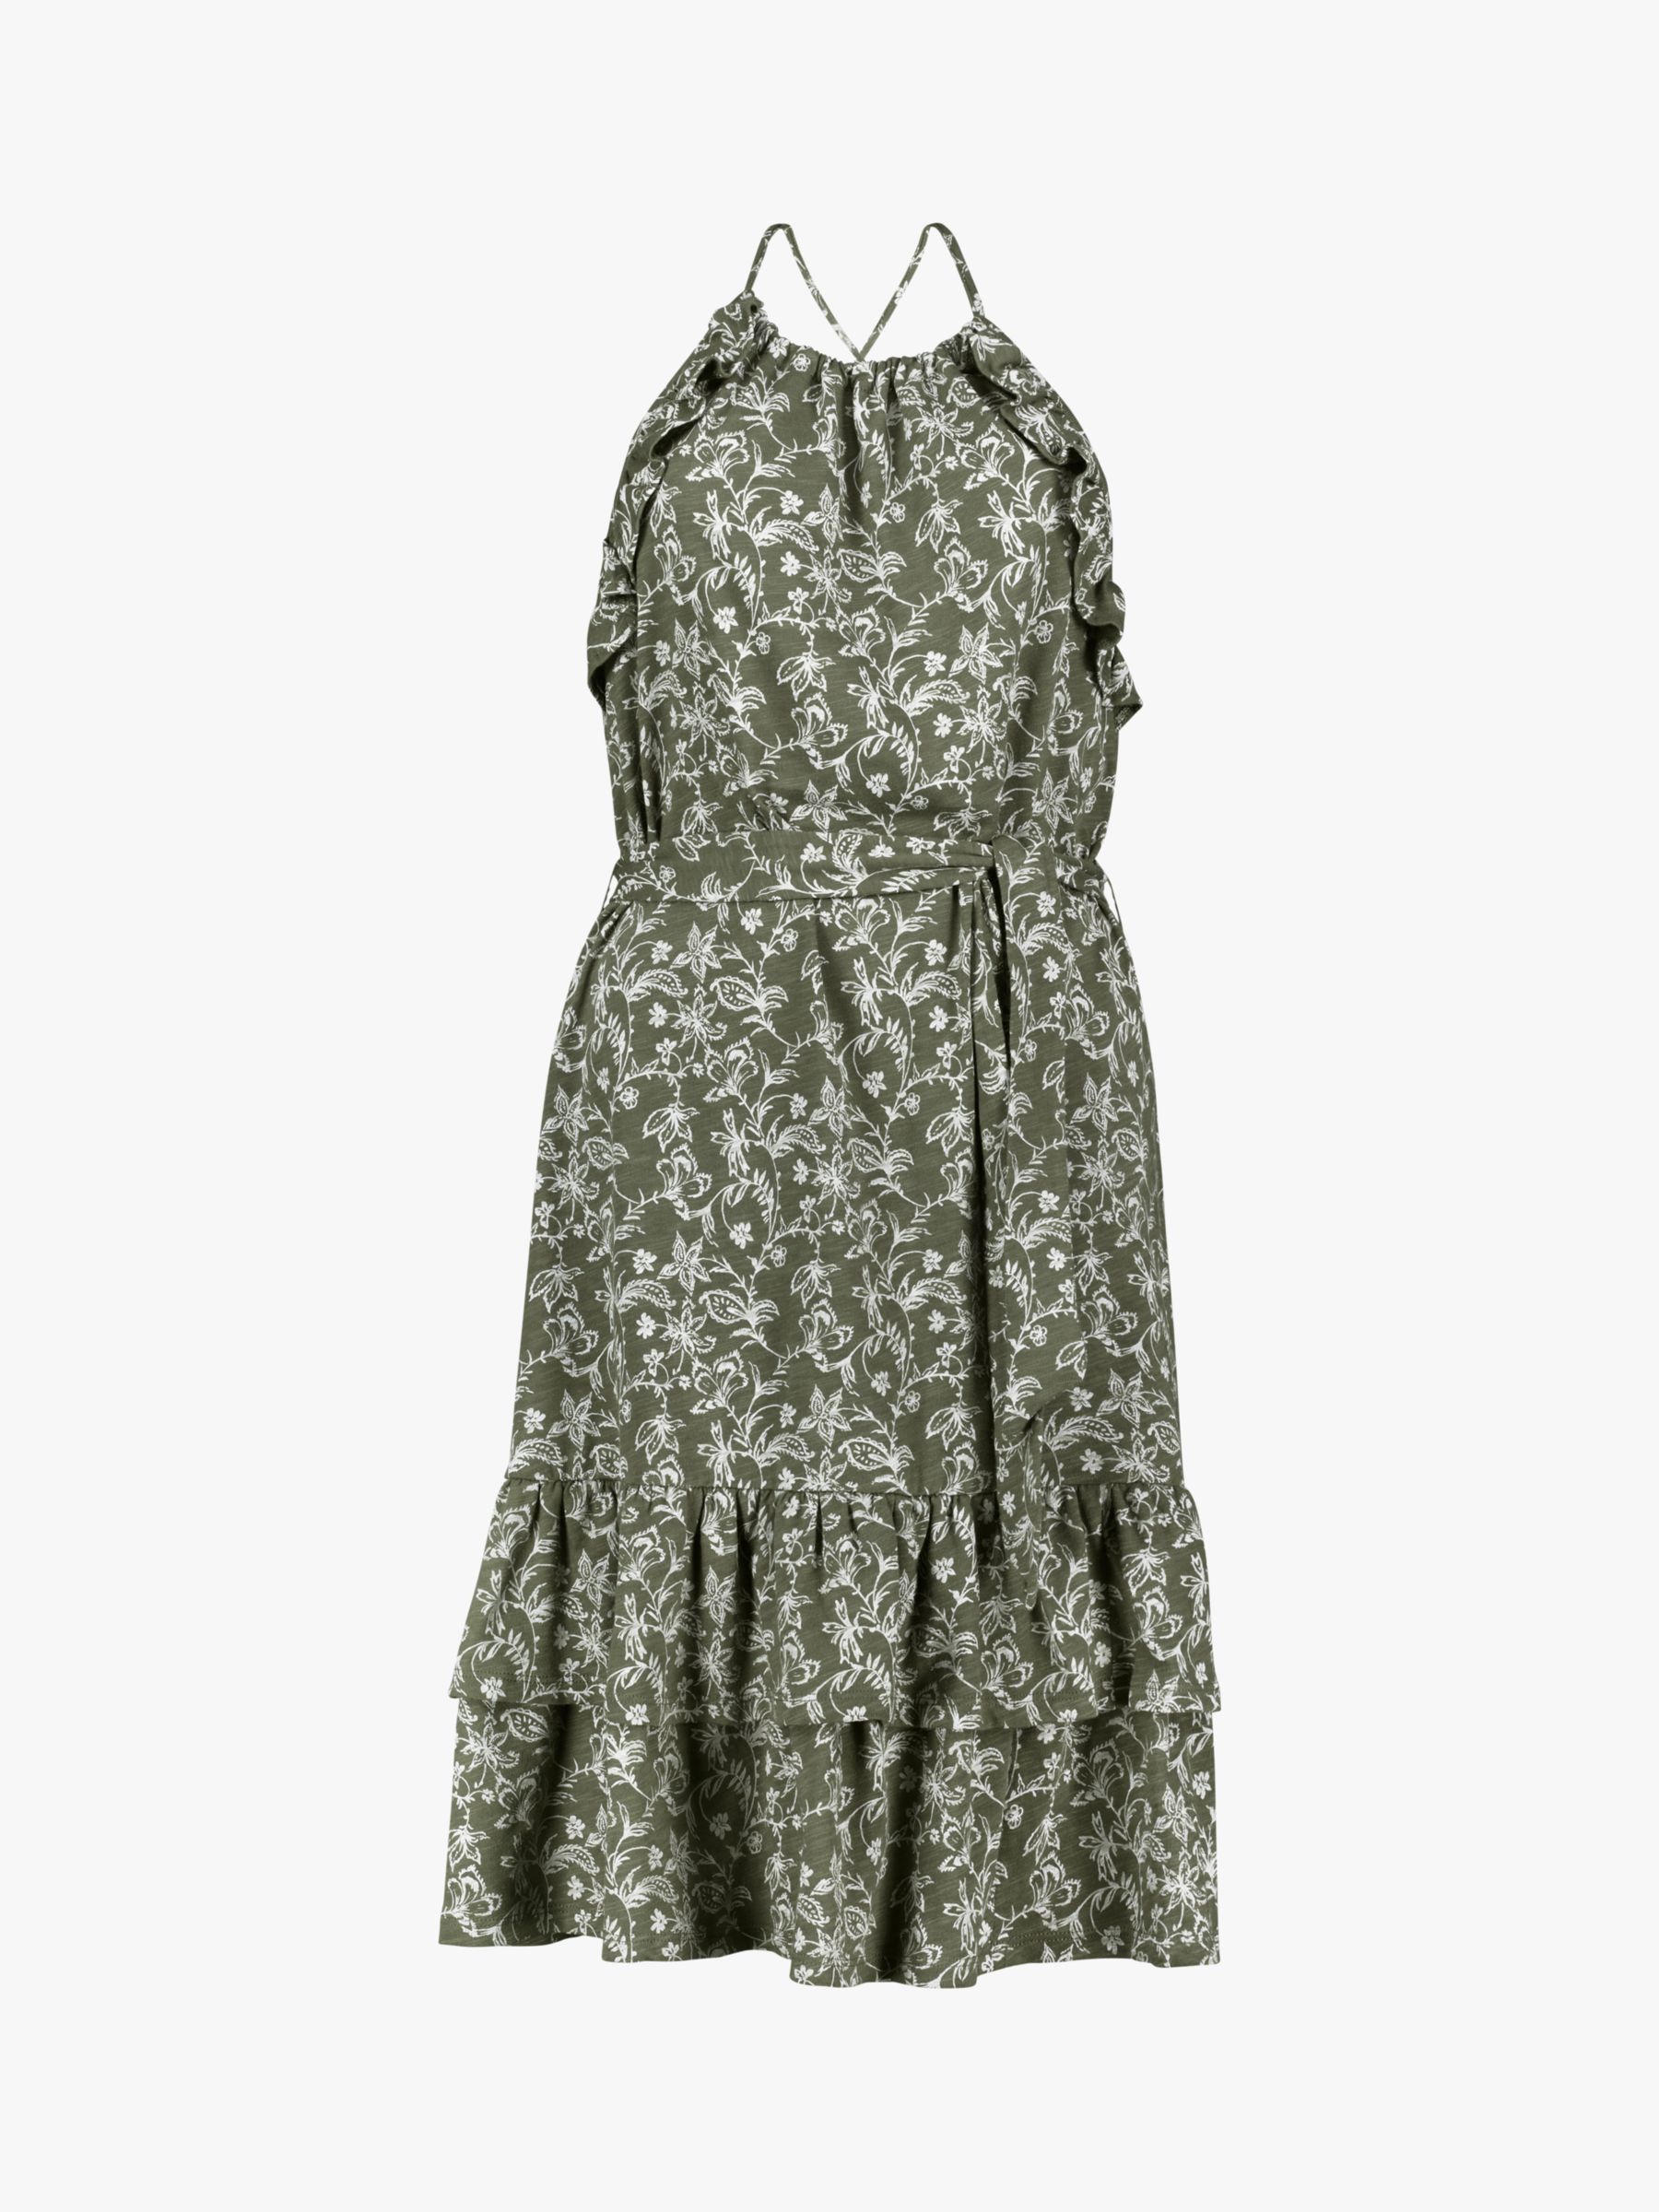 Baukjen Kayla Organic Cotton Floral Tiered Dress, Khaki, 16